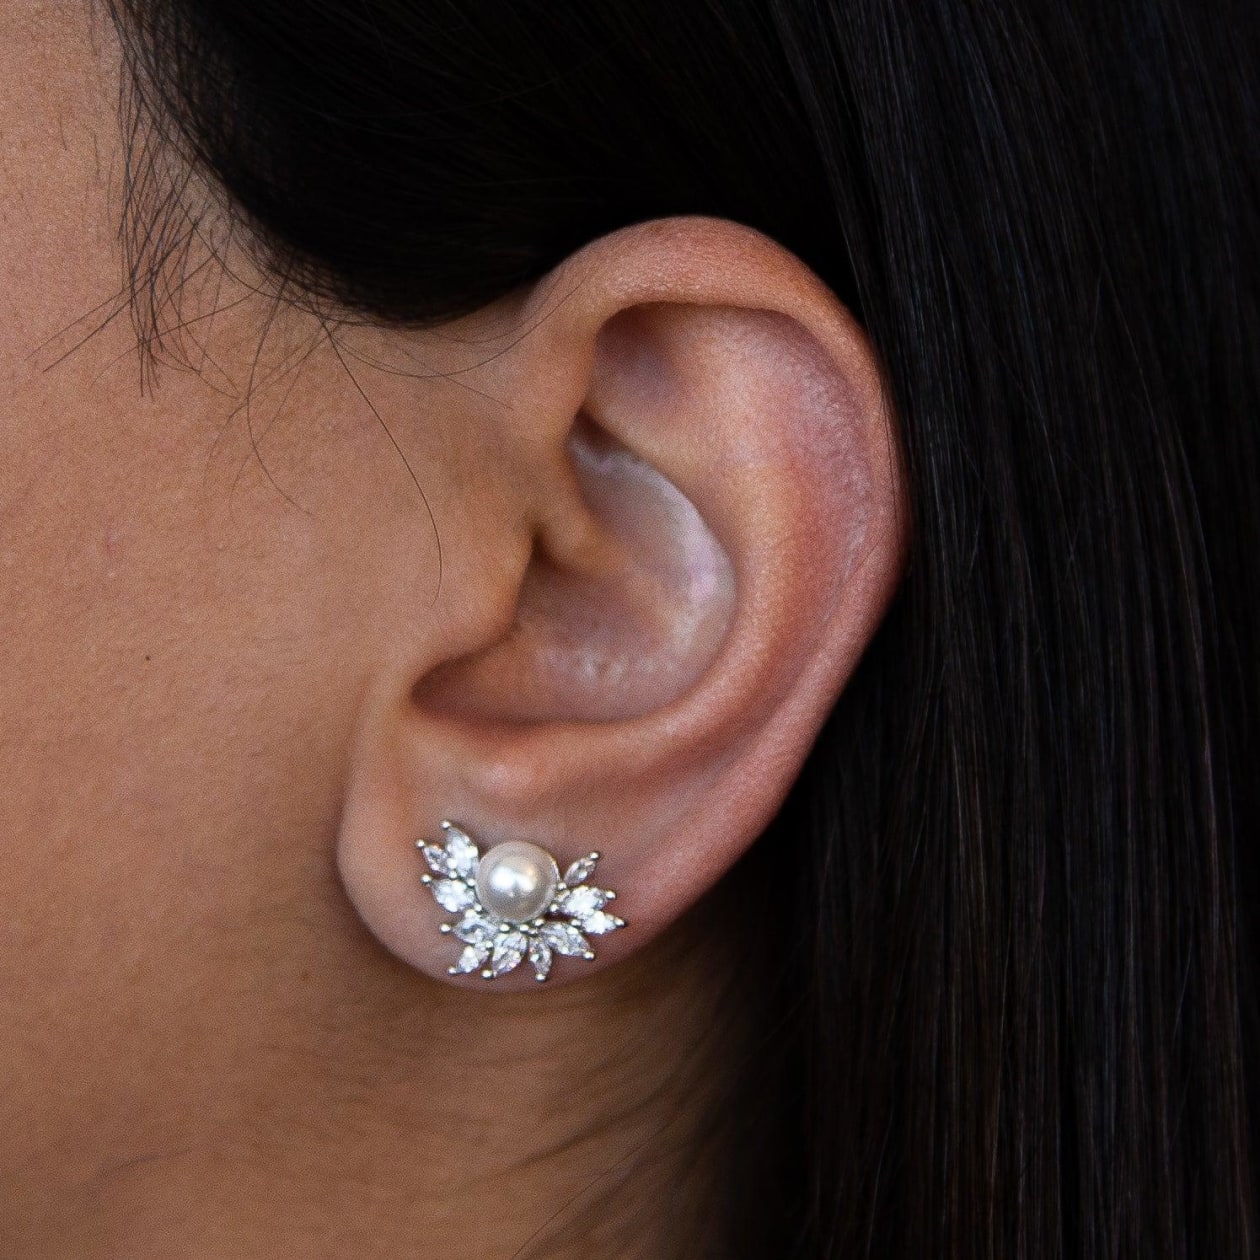 Pearlescent Blossom Earrings